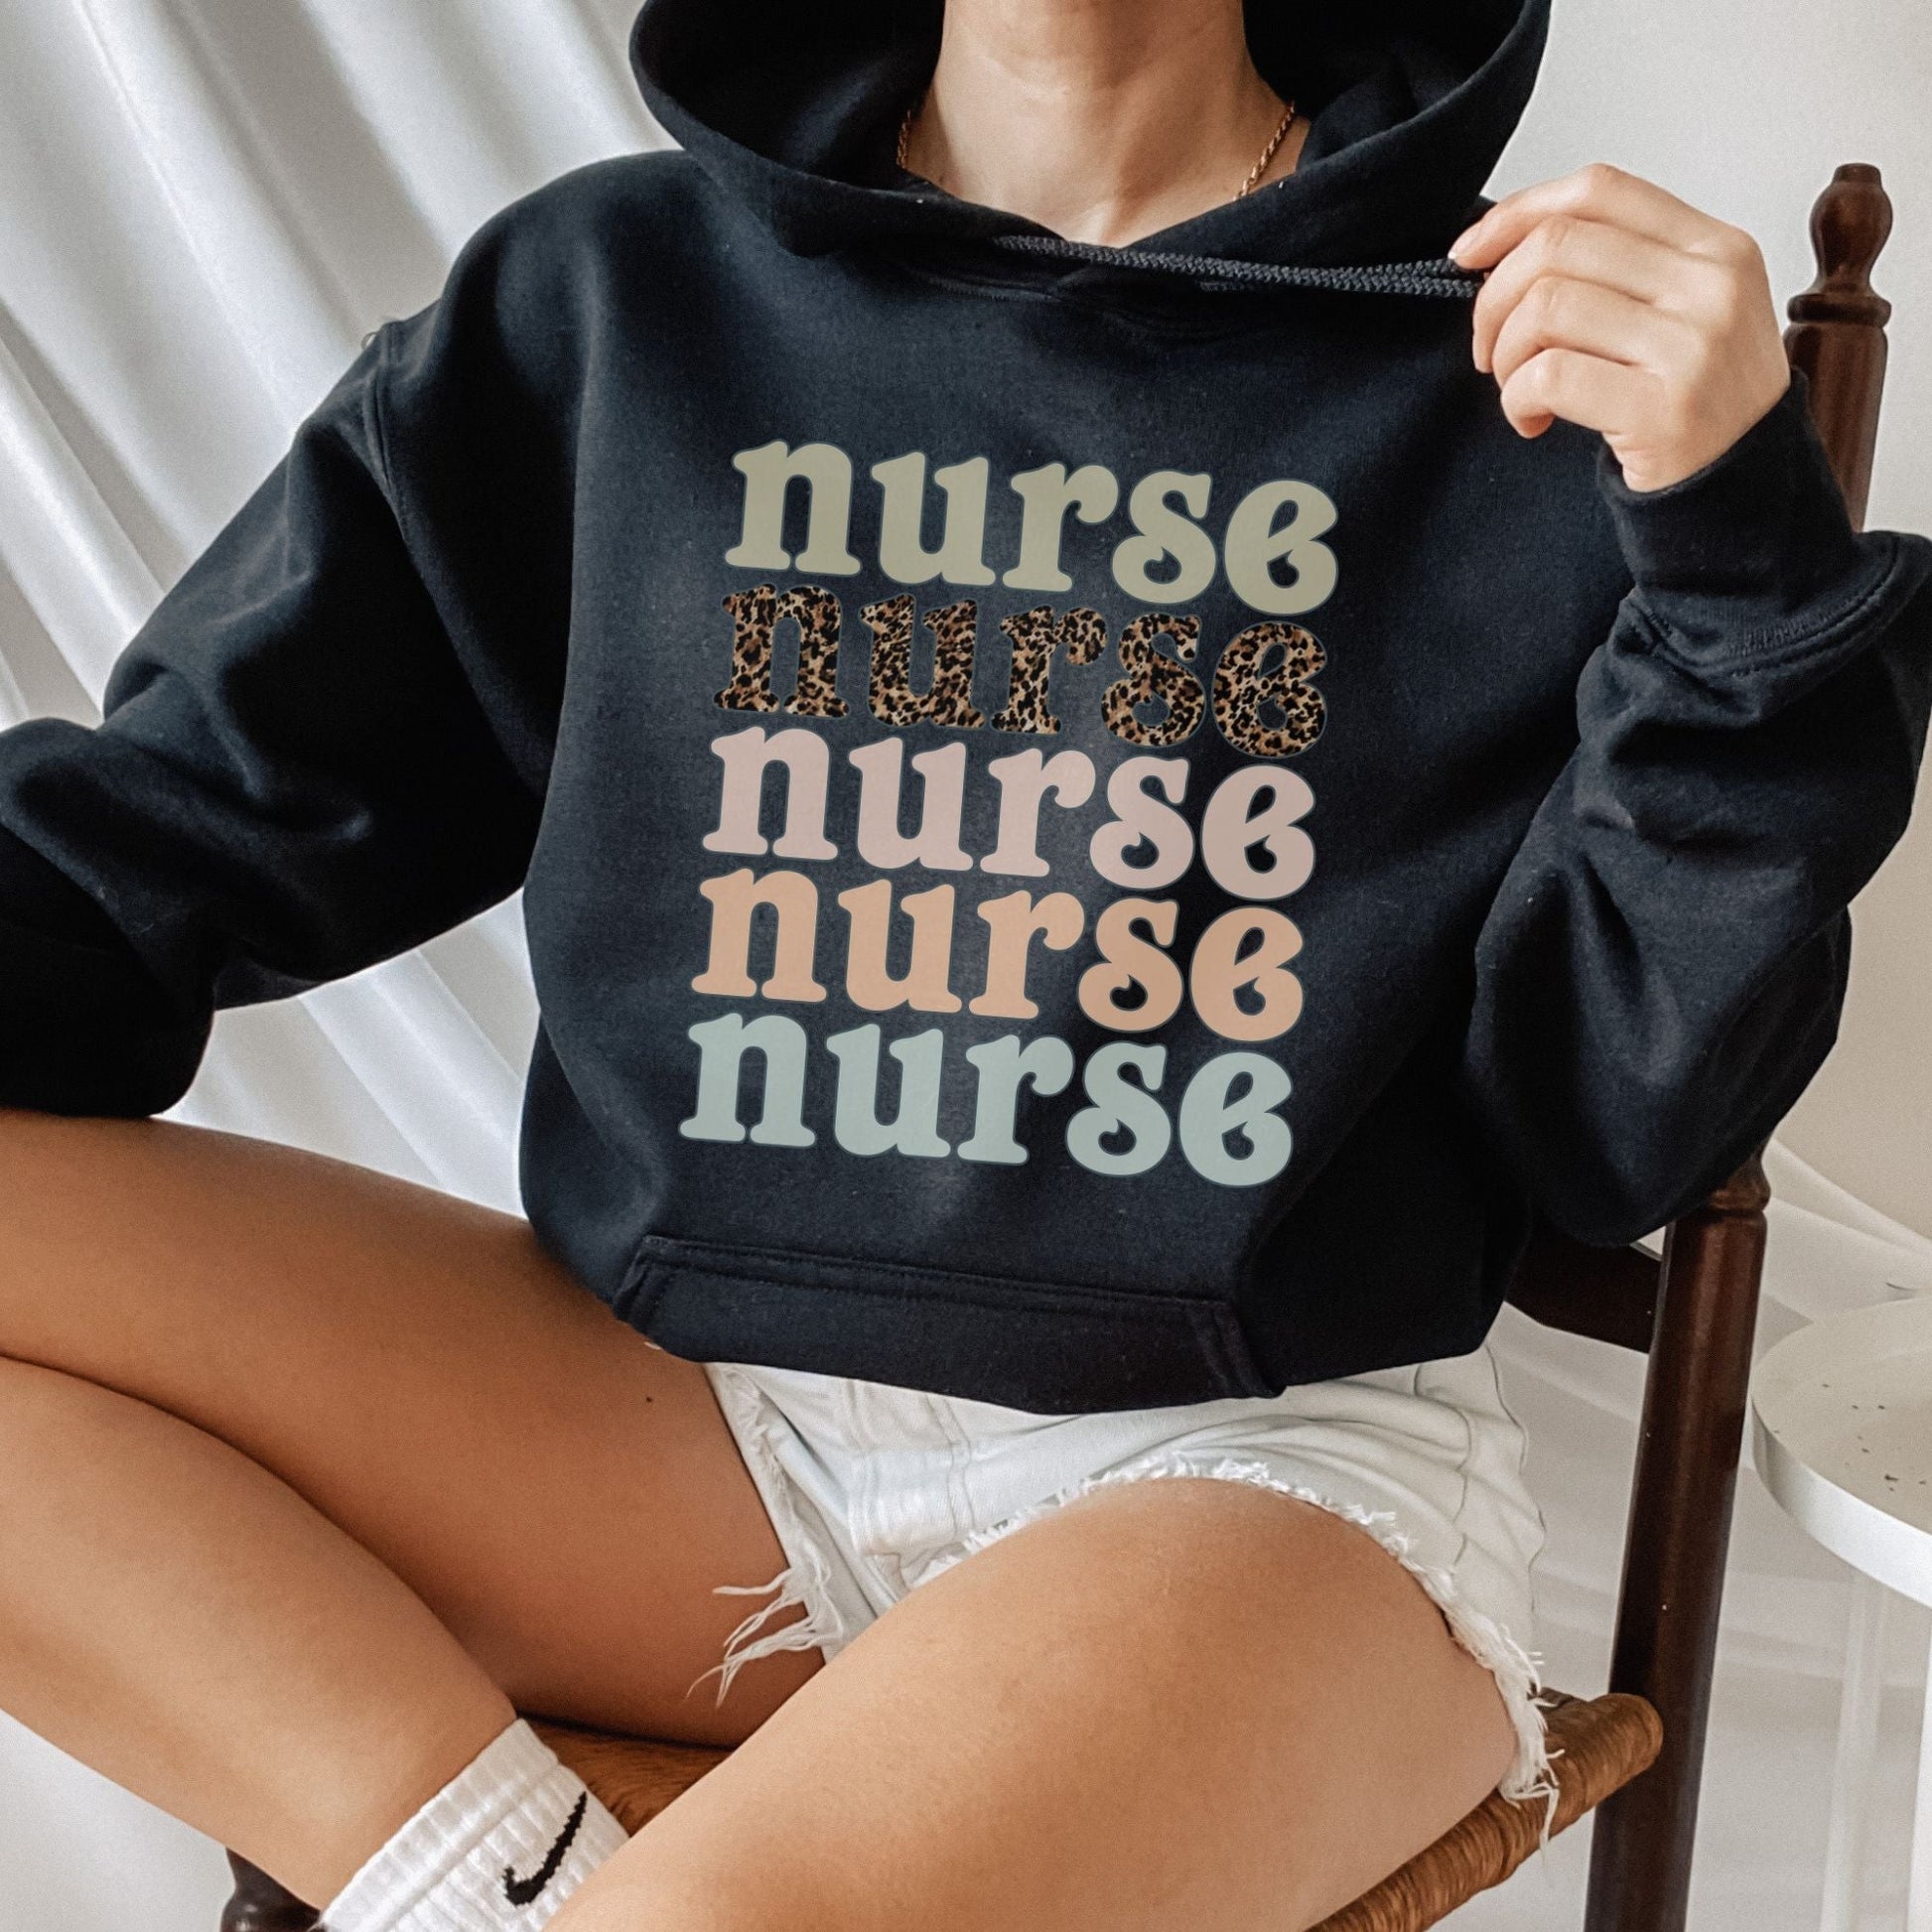 Registered Nurse Shirt, Nursing Student, Pediatric Nurse, ER Nurse Sweatshirt, Nurse Gift, Nurse Hoodie, Funny Nurse Shirt, Nurse Practitioner